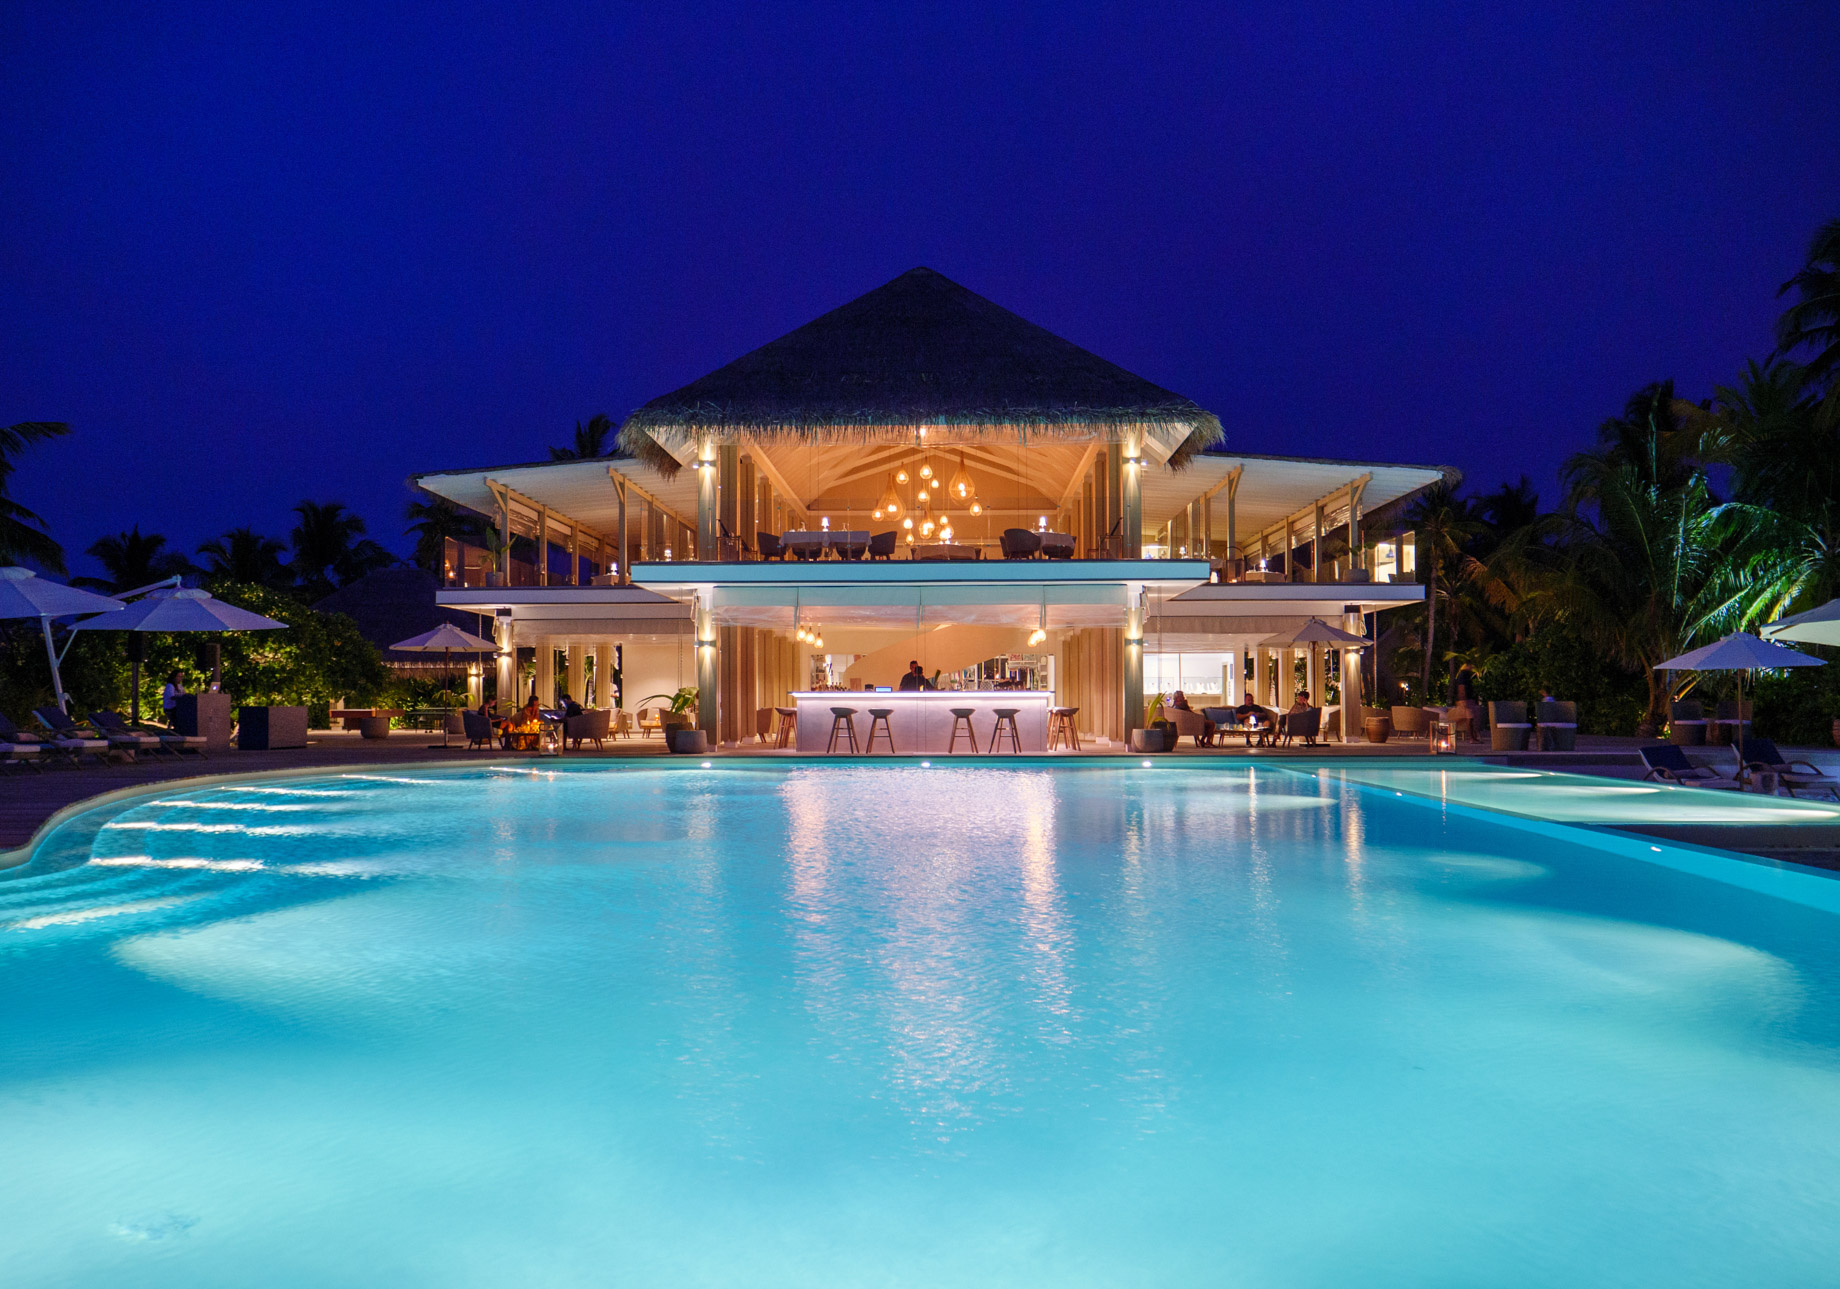 Baglioni Resort Maldives – Maagau Island, Rinbudhoo, Maldives – Gusto Restaurant and Pool View Sunset